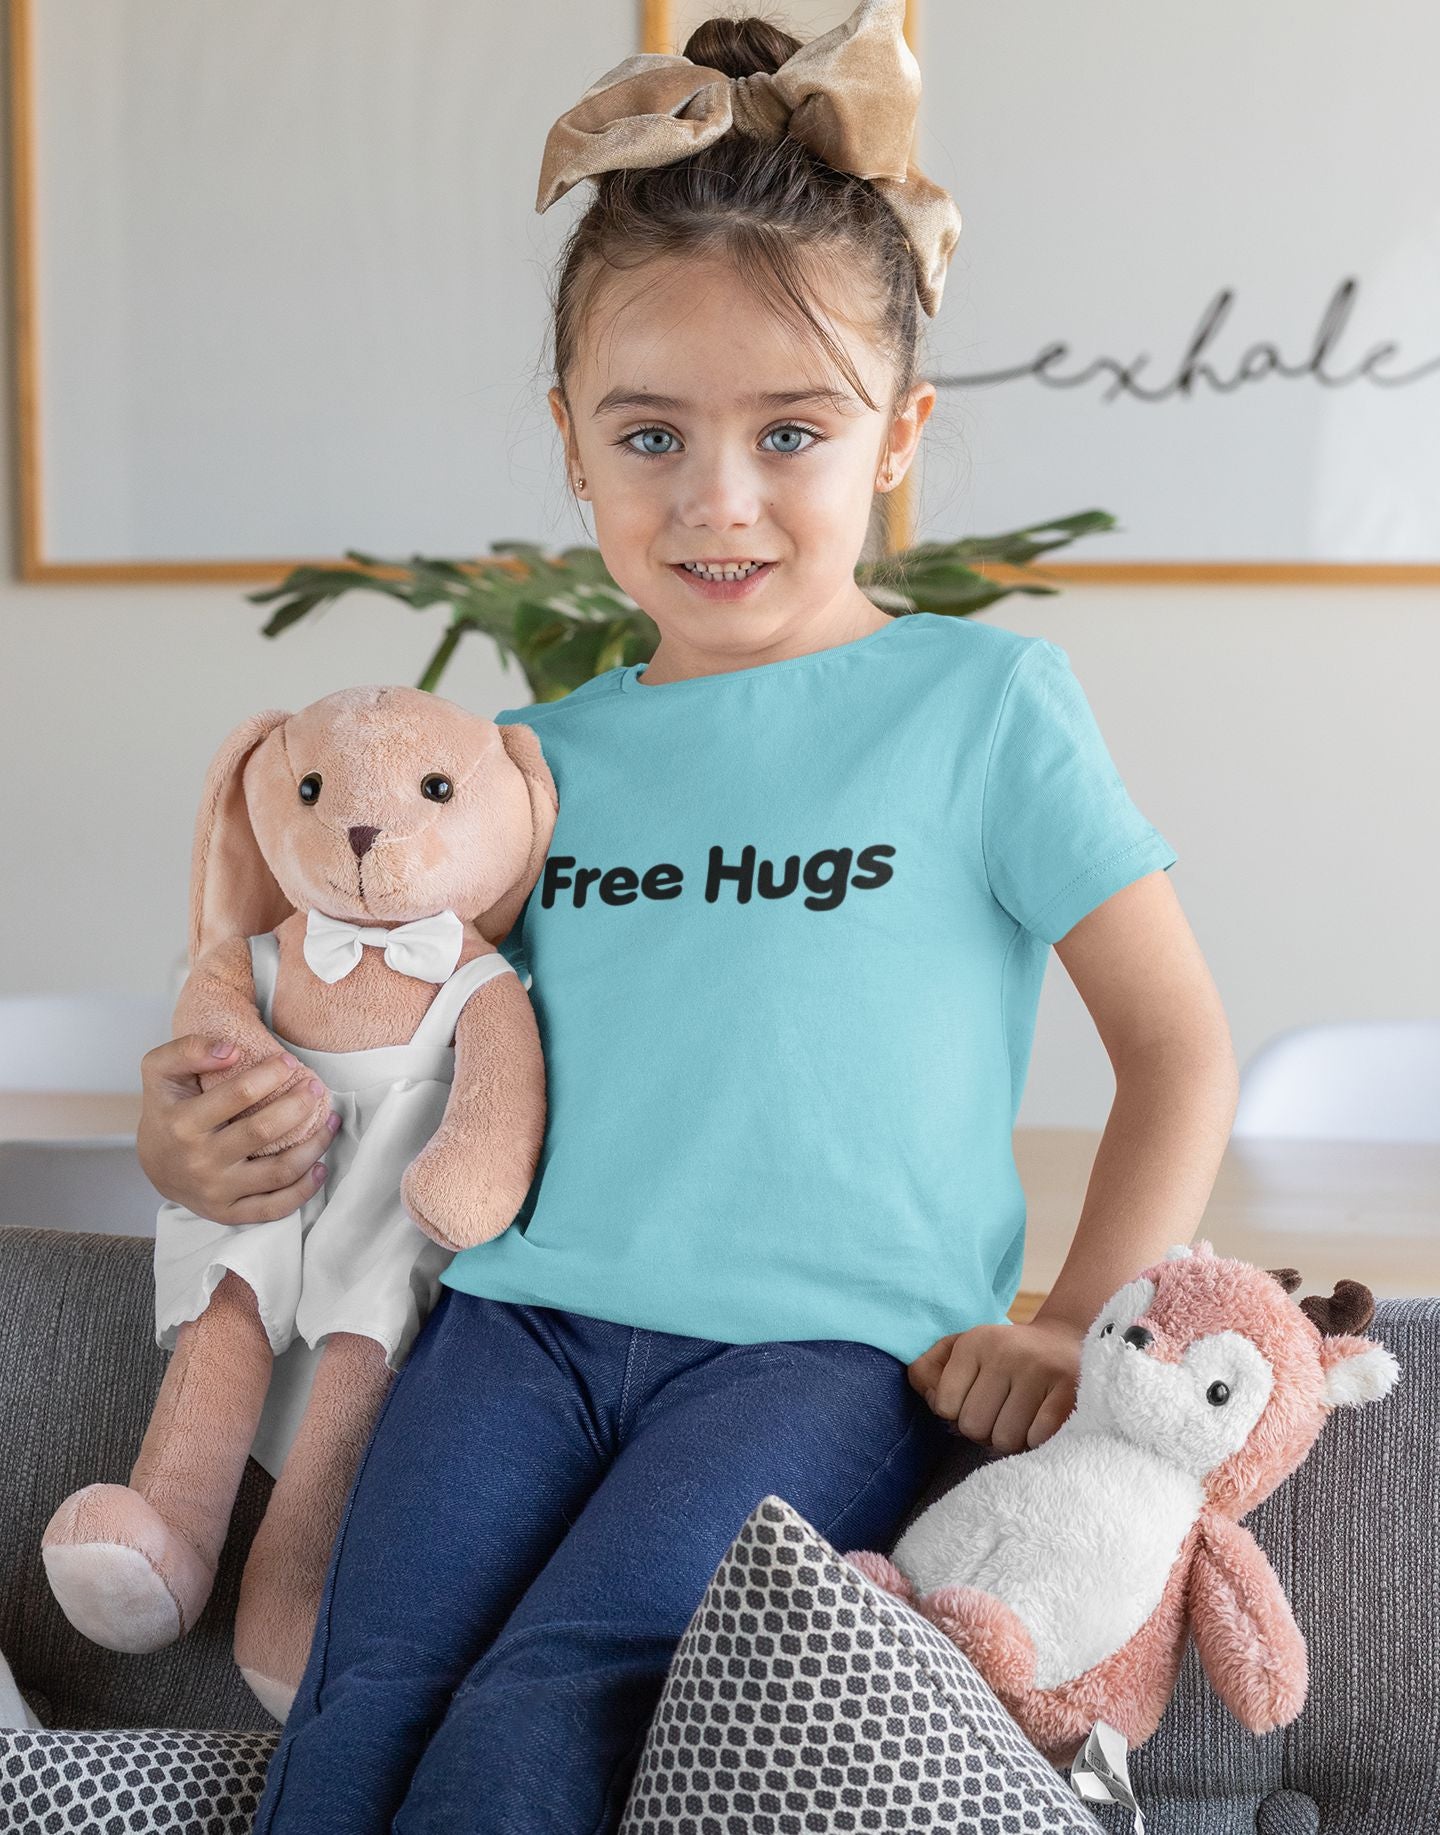 Free Hugs Infant/Toddler  (#626-7)